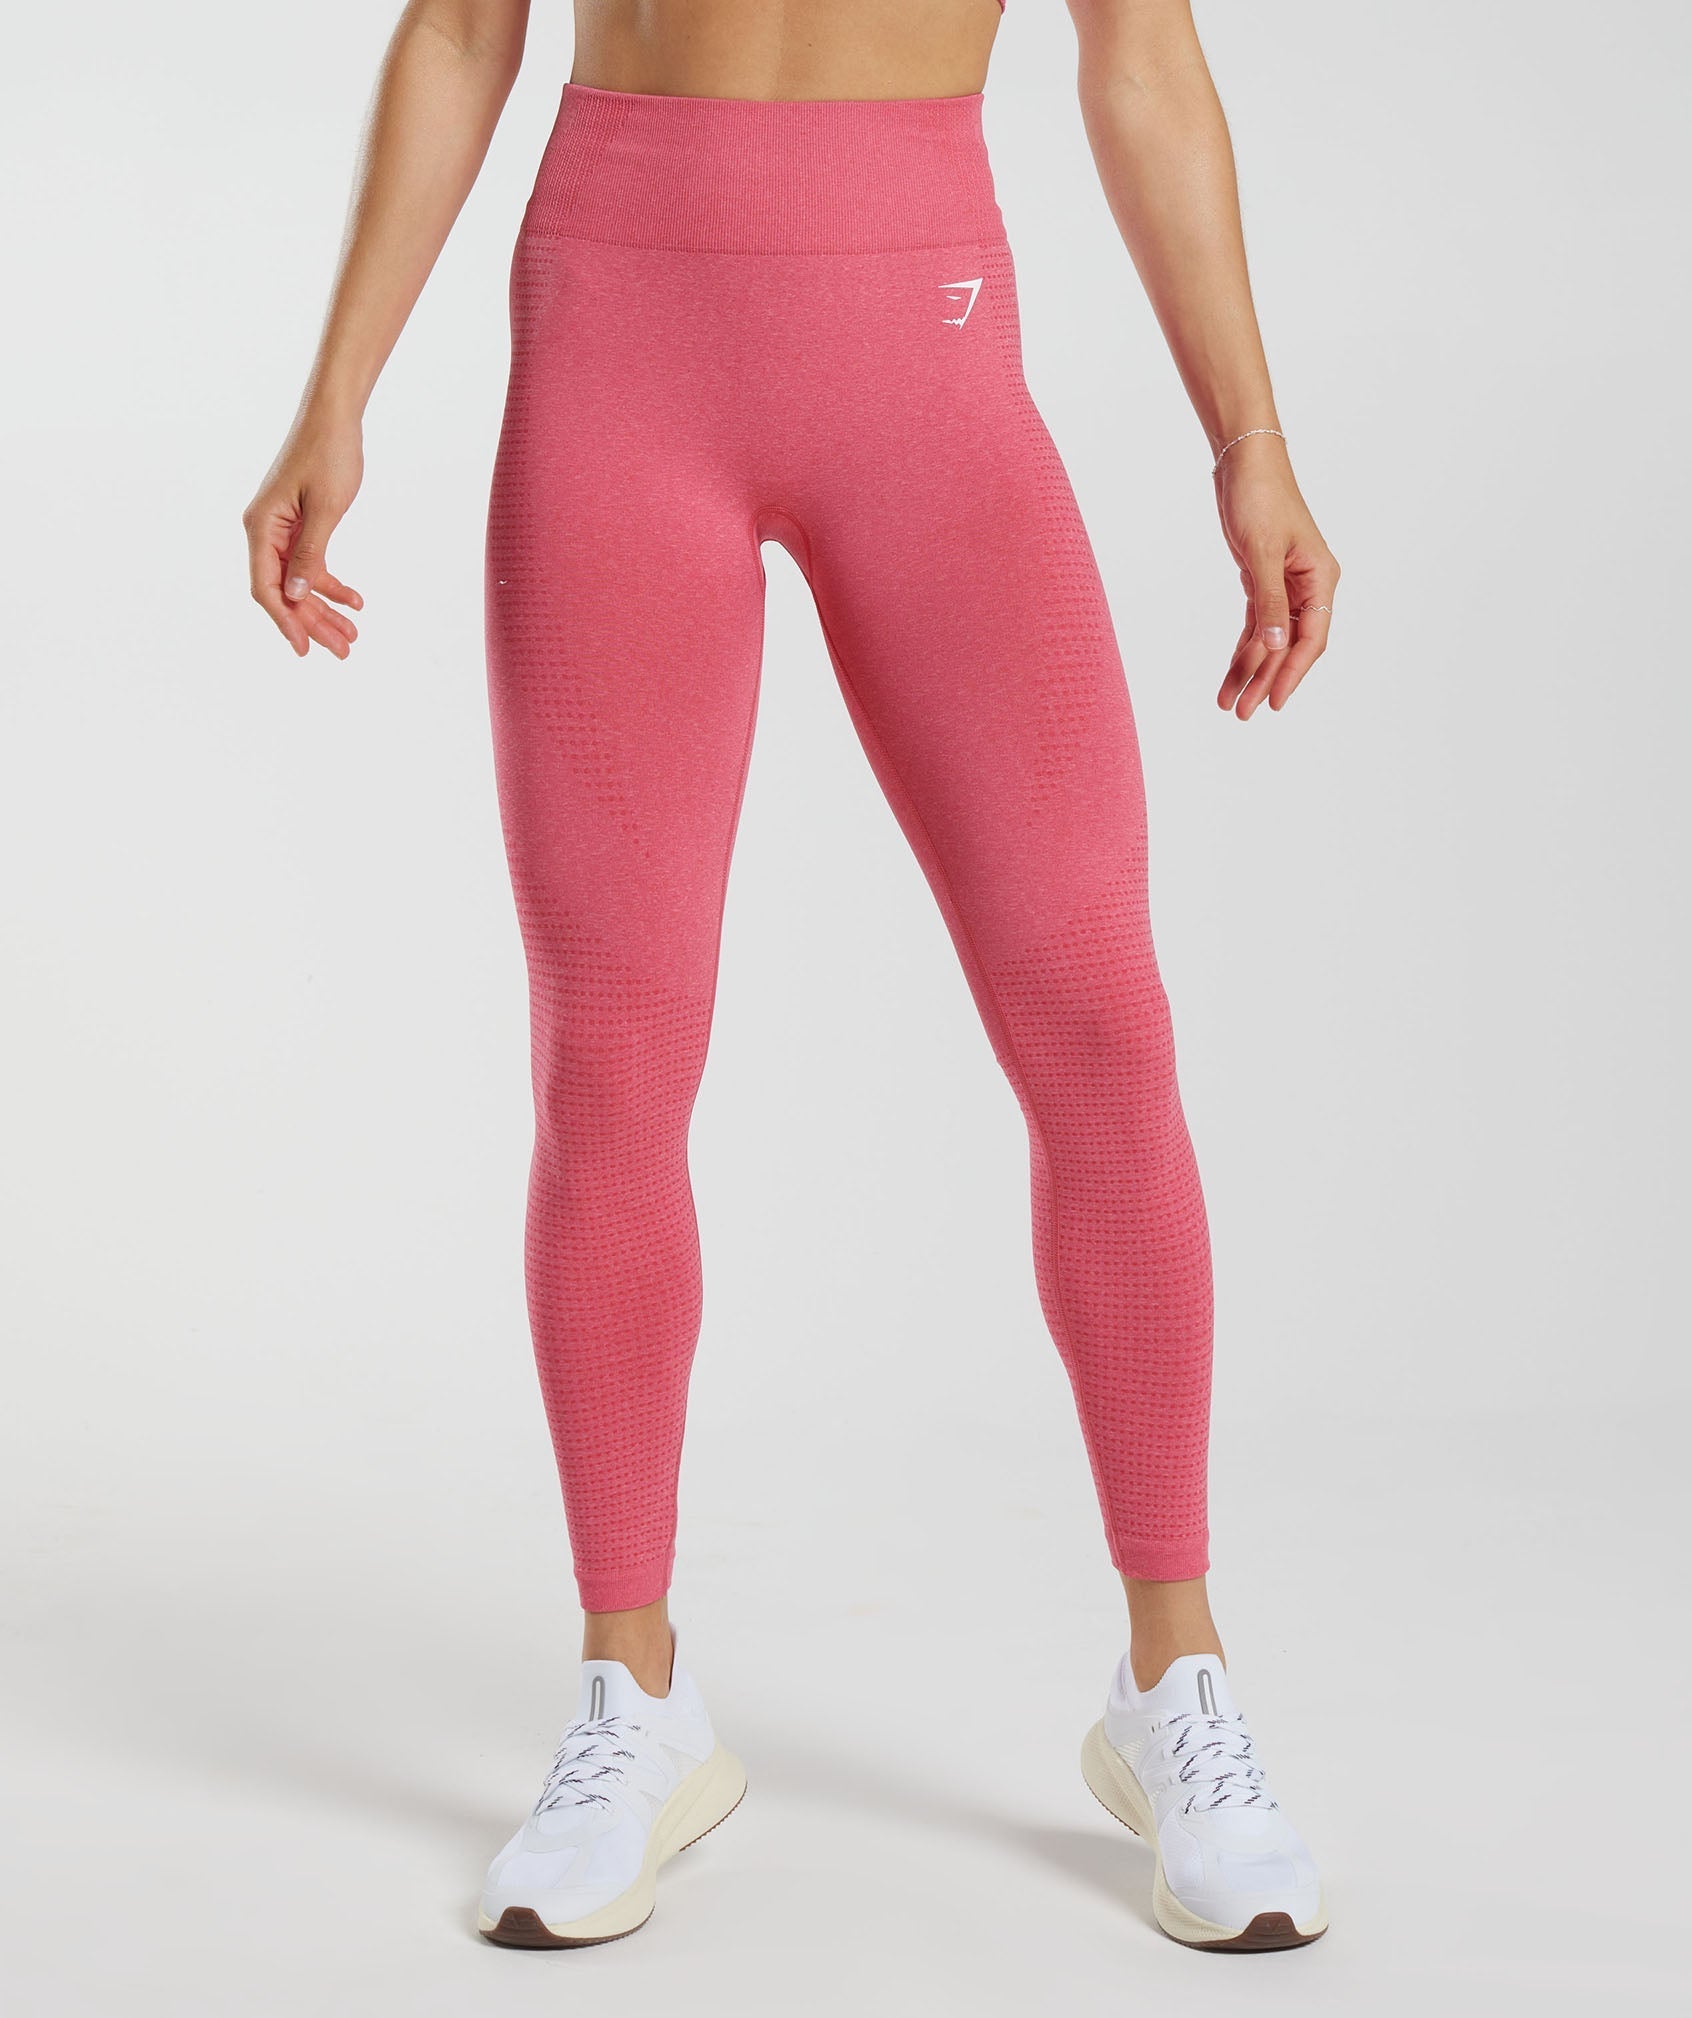 Legging Classic Pink - Rokbox Fitness